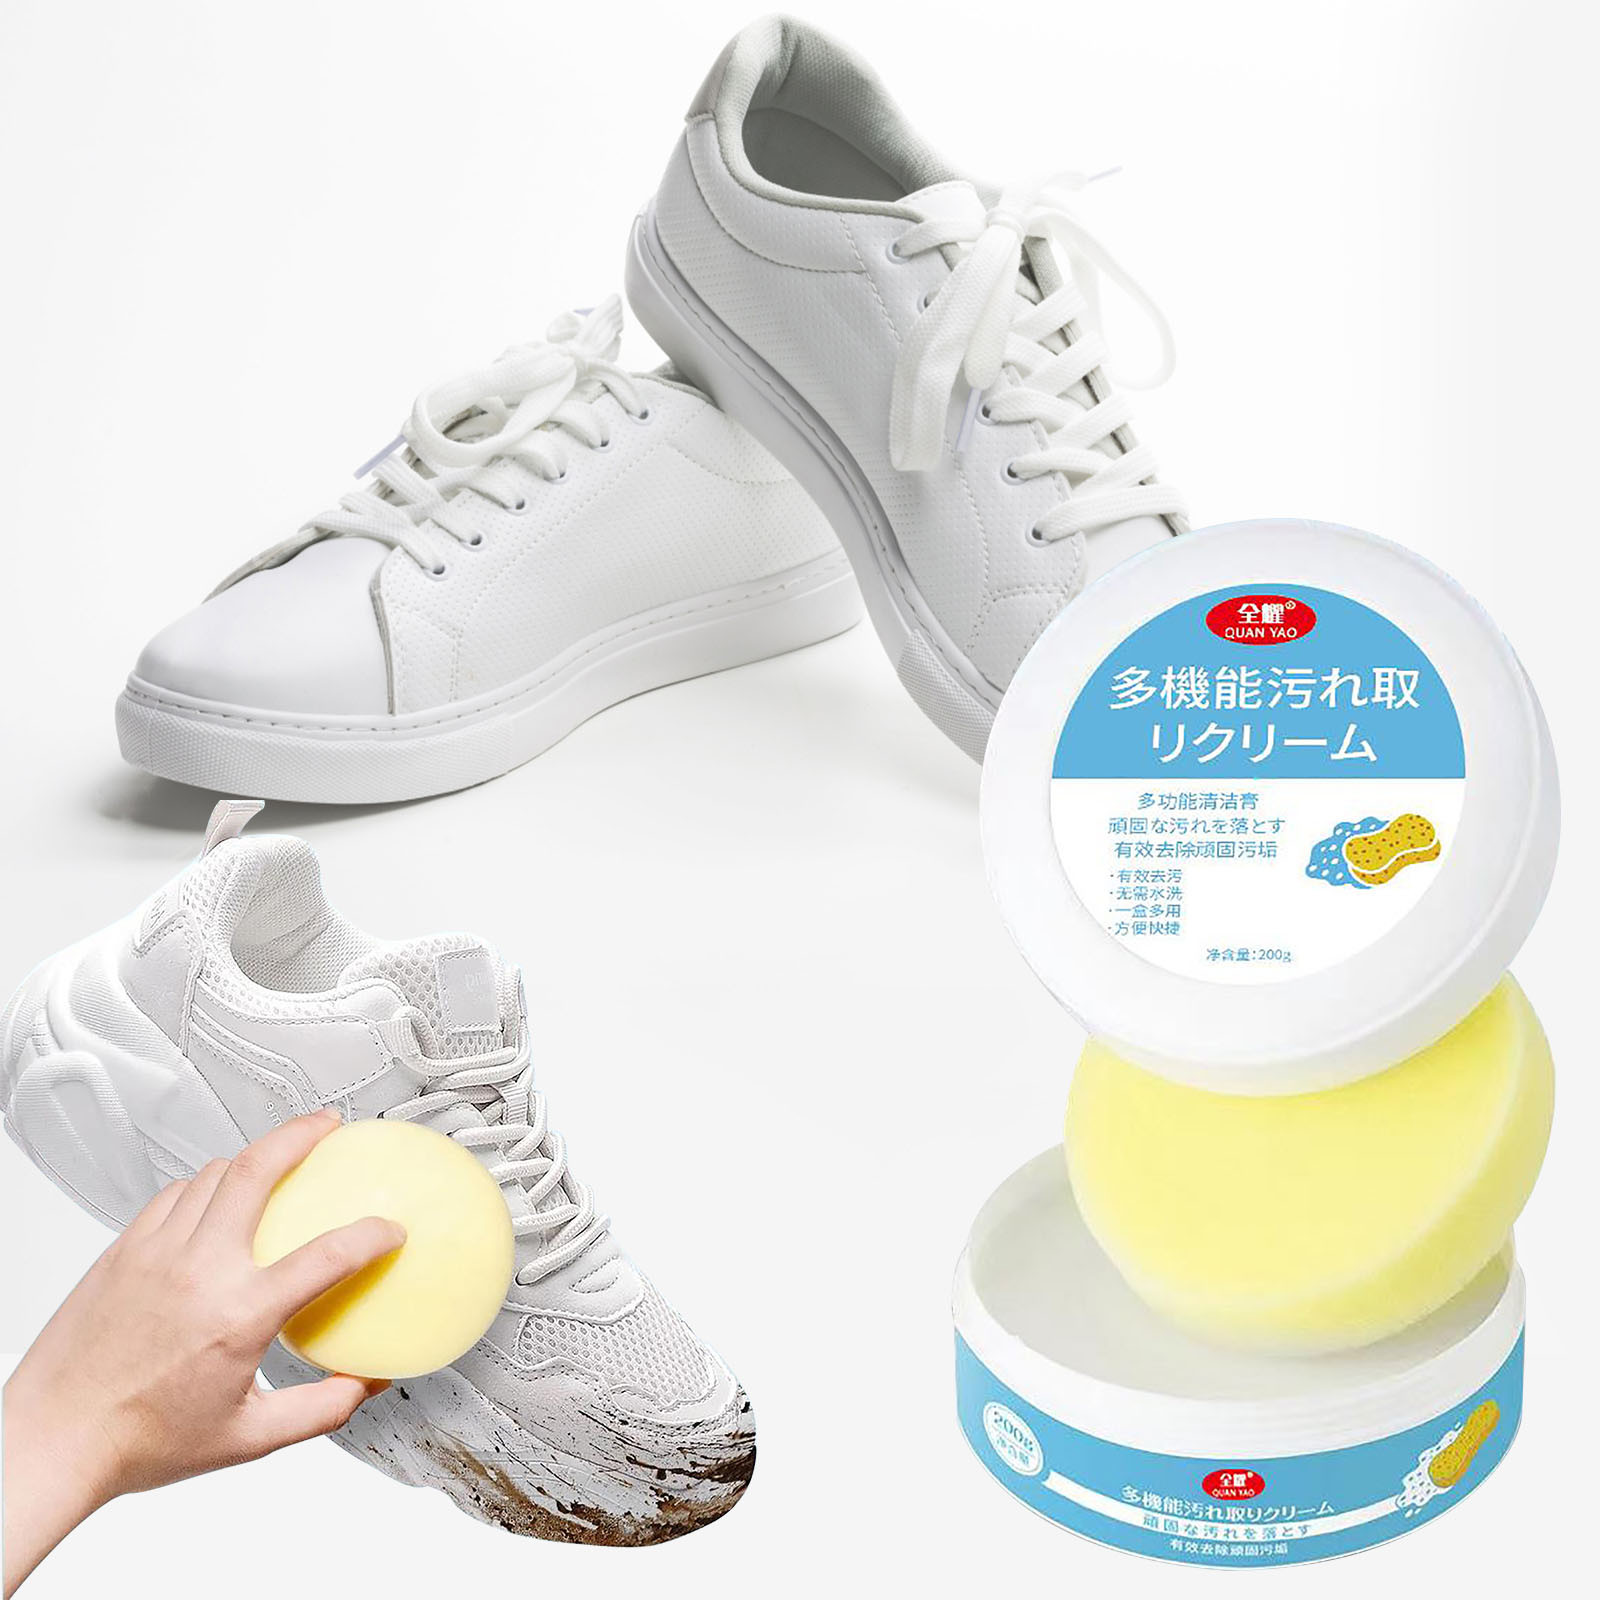 EJWQWQE Shoes Multifunctional Cleaning Cream, Small White Shoe Cleaning  Cream 200g, Sports Shoe Special Cleaning Brush Shoe Cleaning Agent